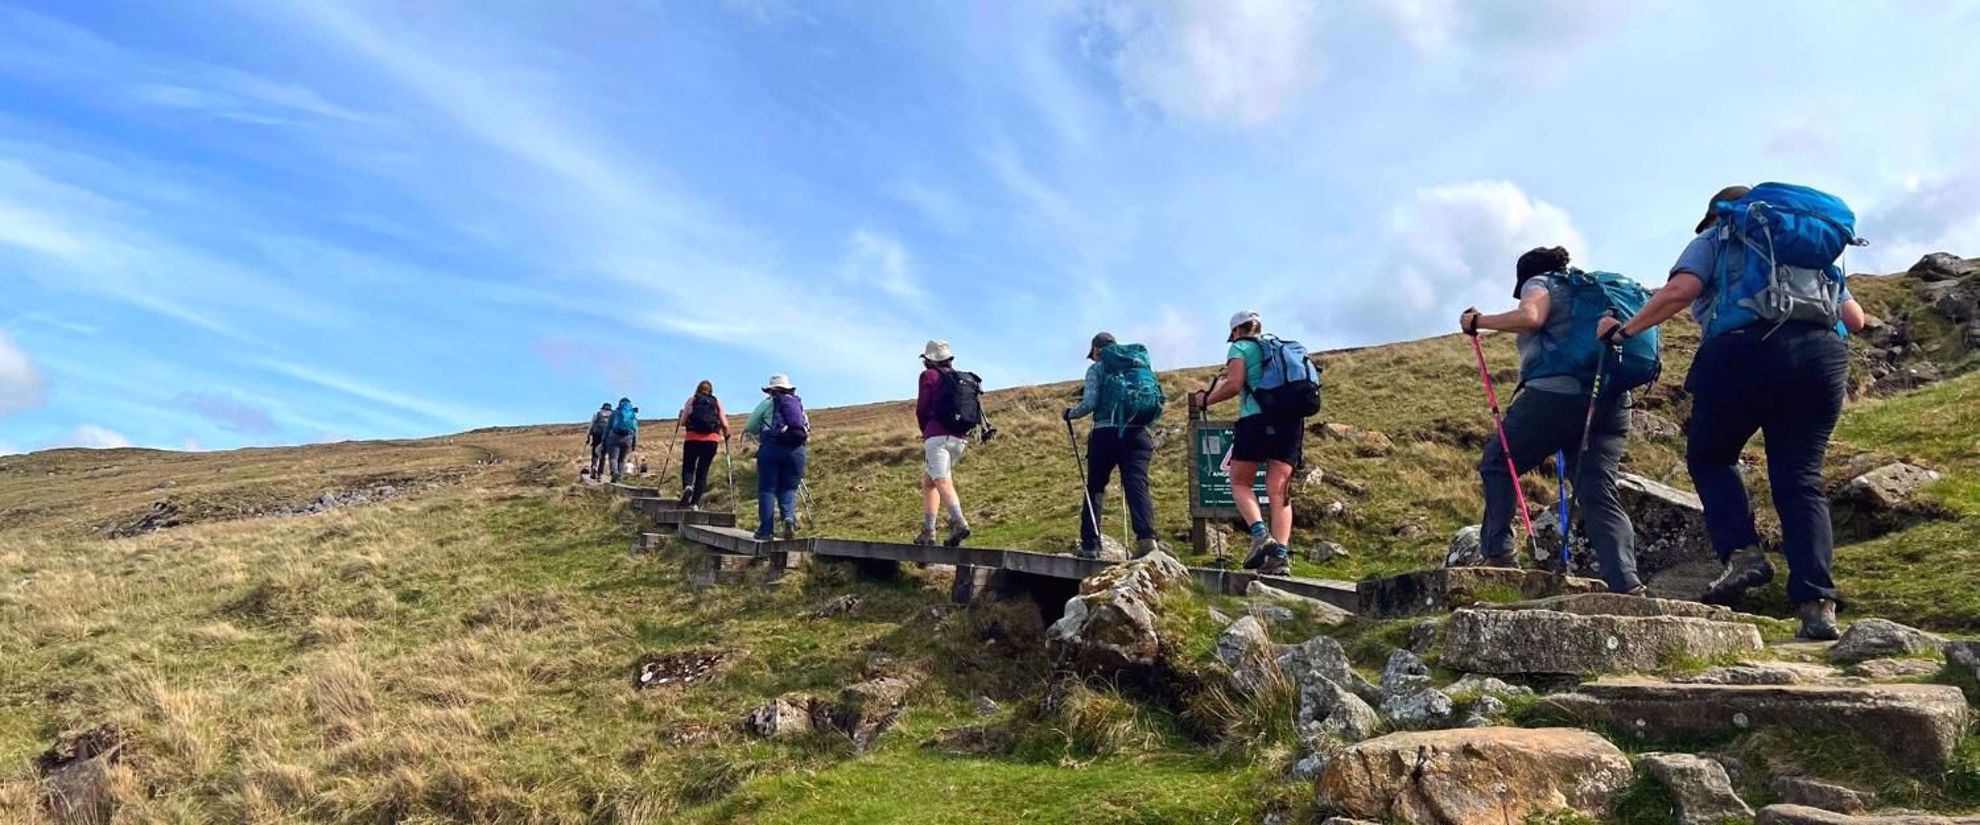 women's adventure tour hiking in Ireland